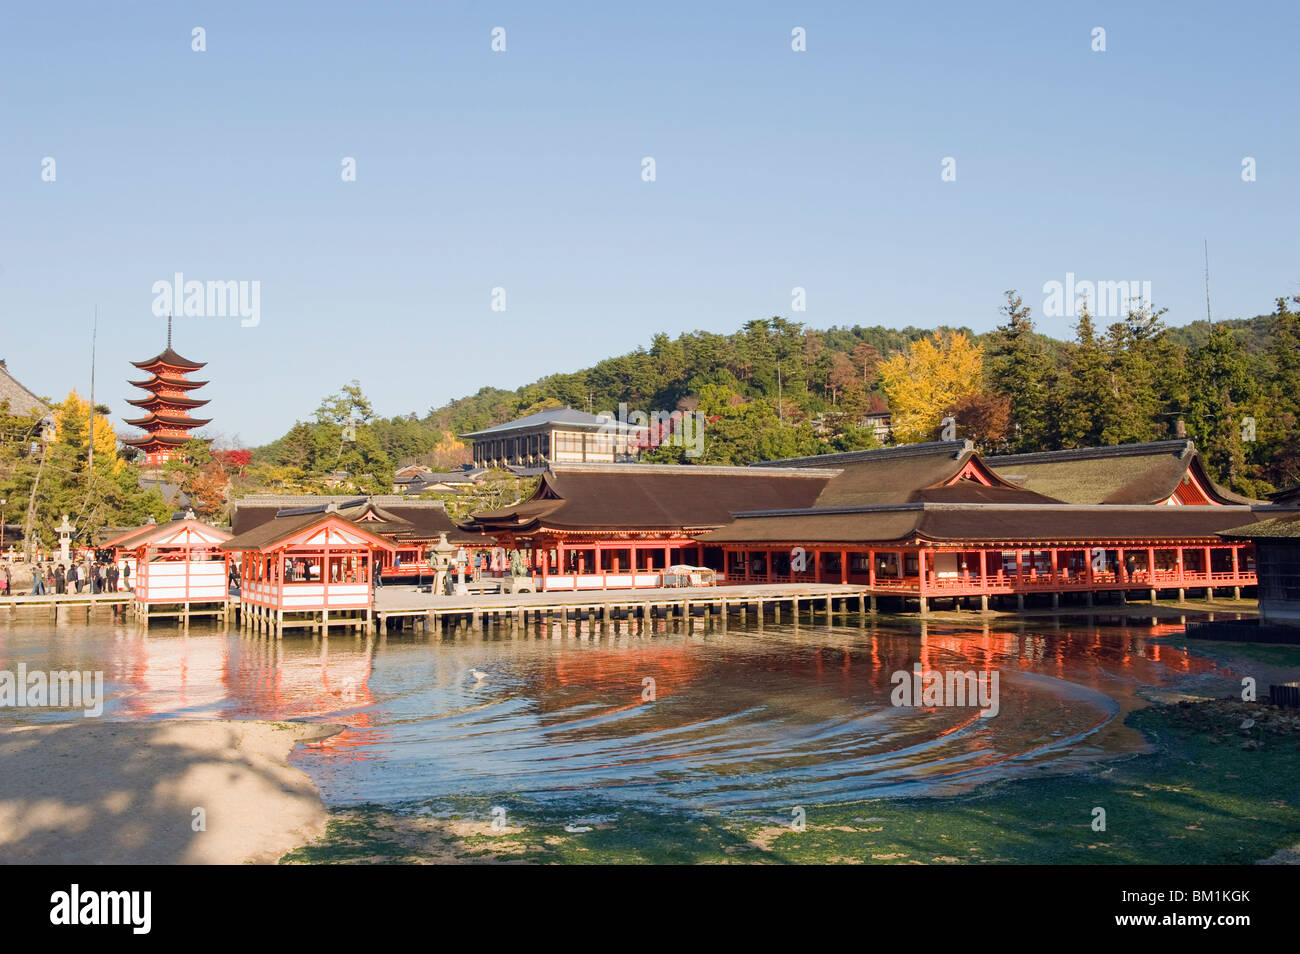 Pagoda and shrine buildings, Itsukushima Shrine, UNESCO World Heritage Site, Miyajima Island, Hiroshima prefecture, Japan, Asia Stock Photo